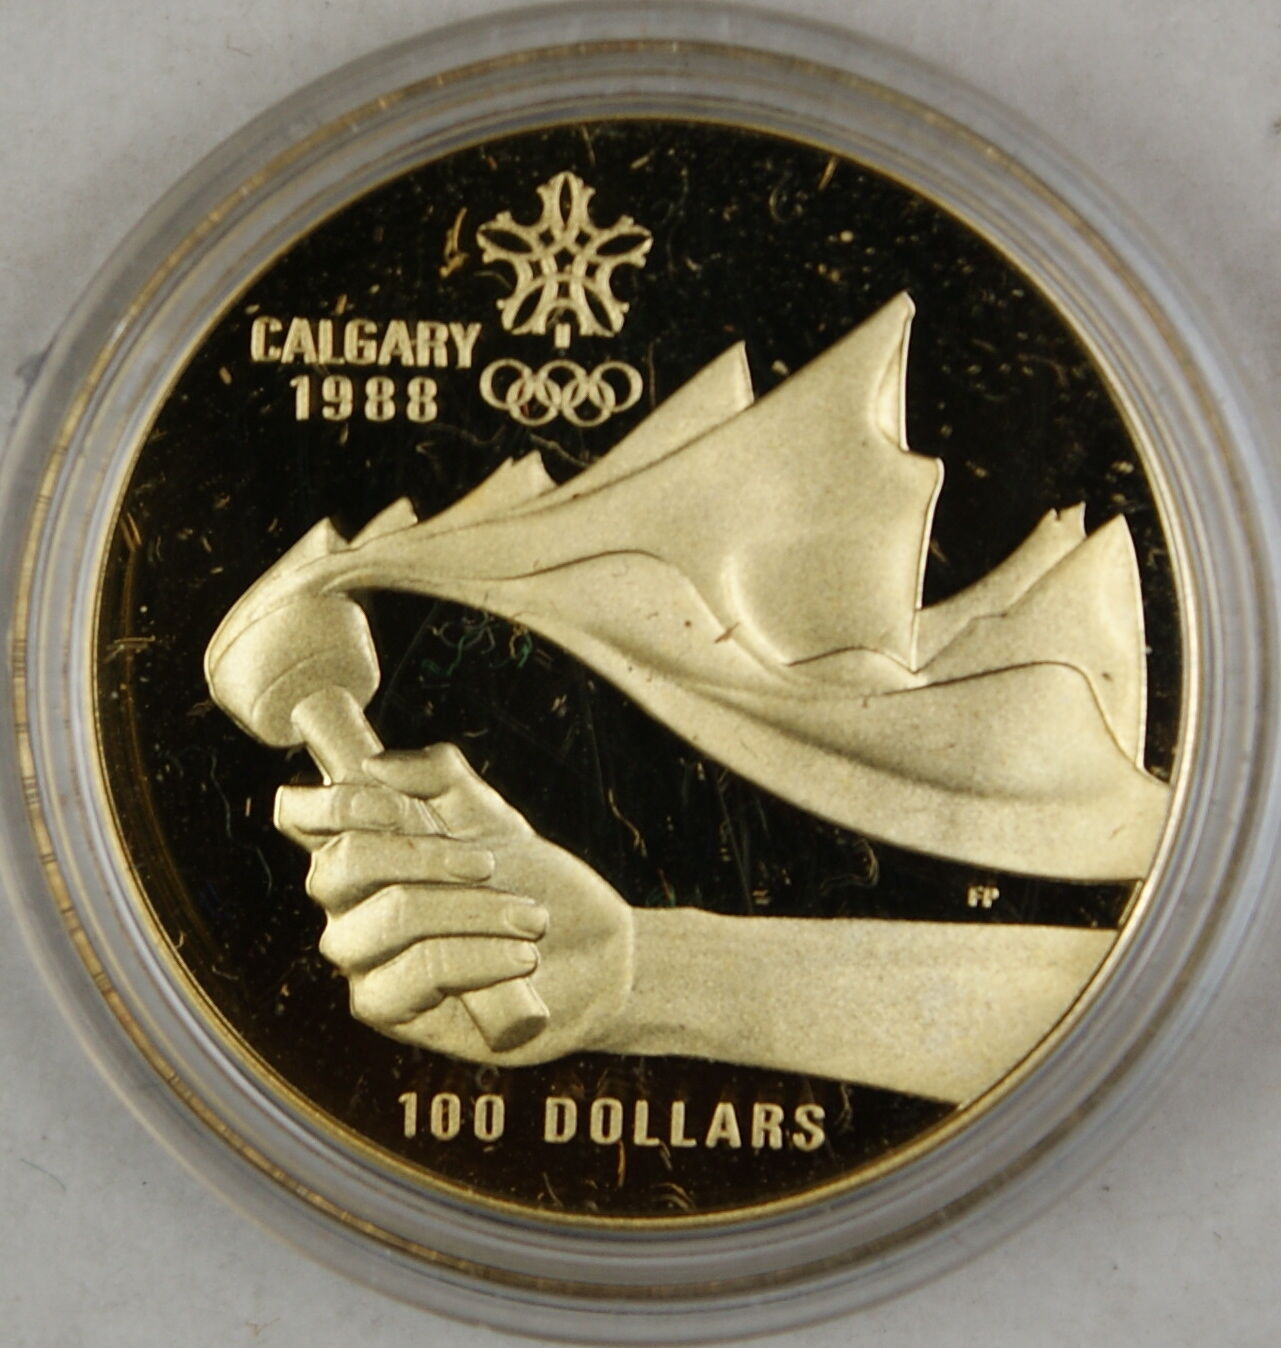 1987 Canada $100 Dollar Proof Gold Coin, 1988 Calgary Olympics, In Box w/ COA